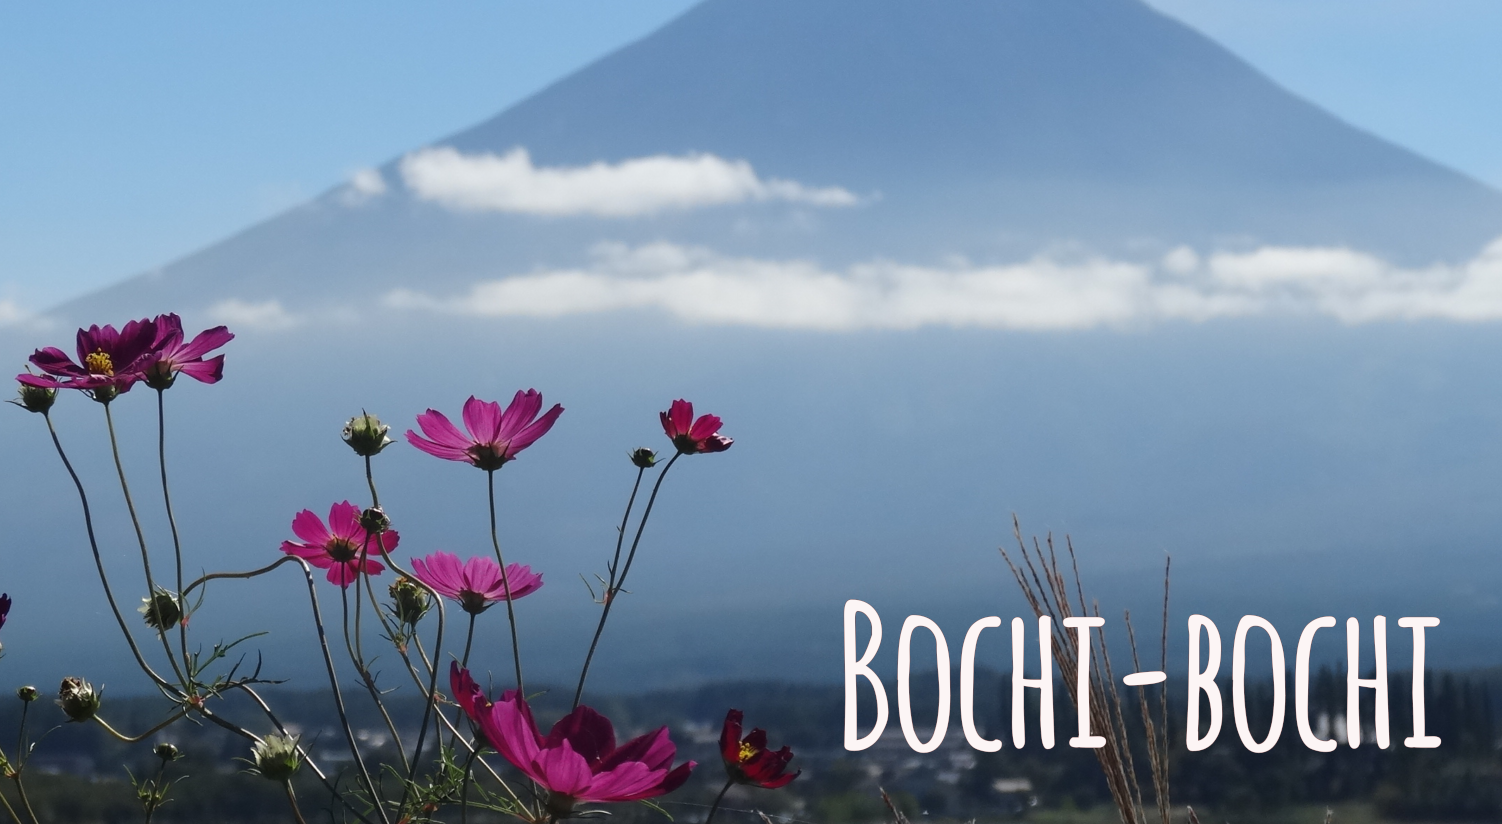 Bochi-bochi